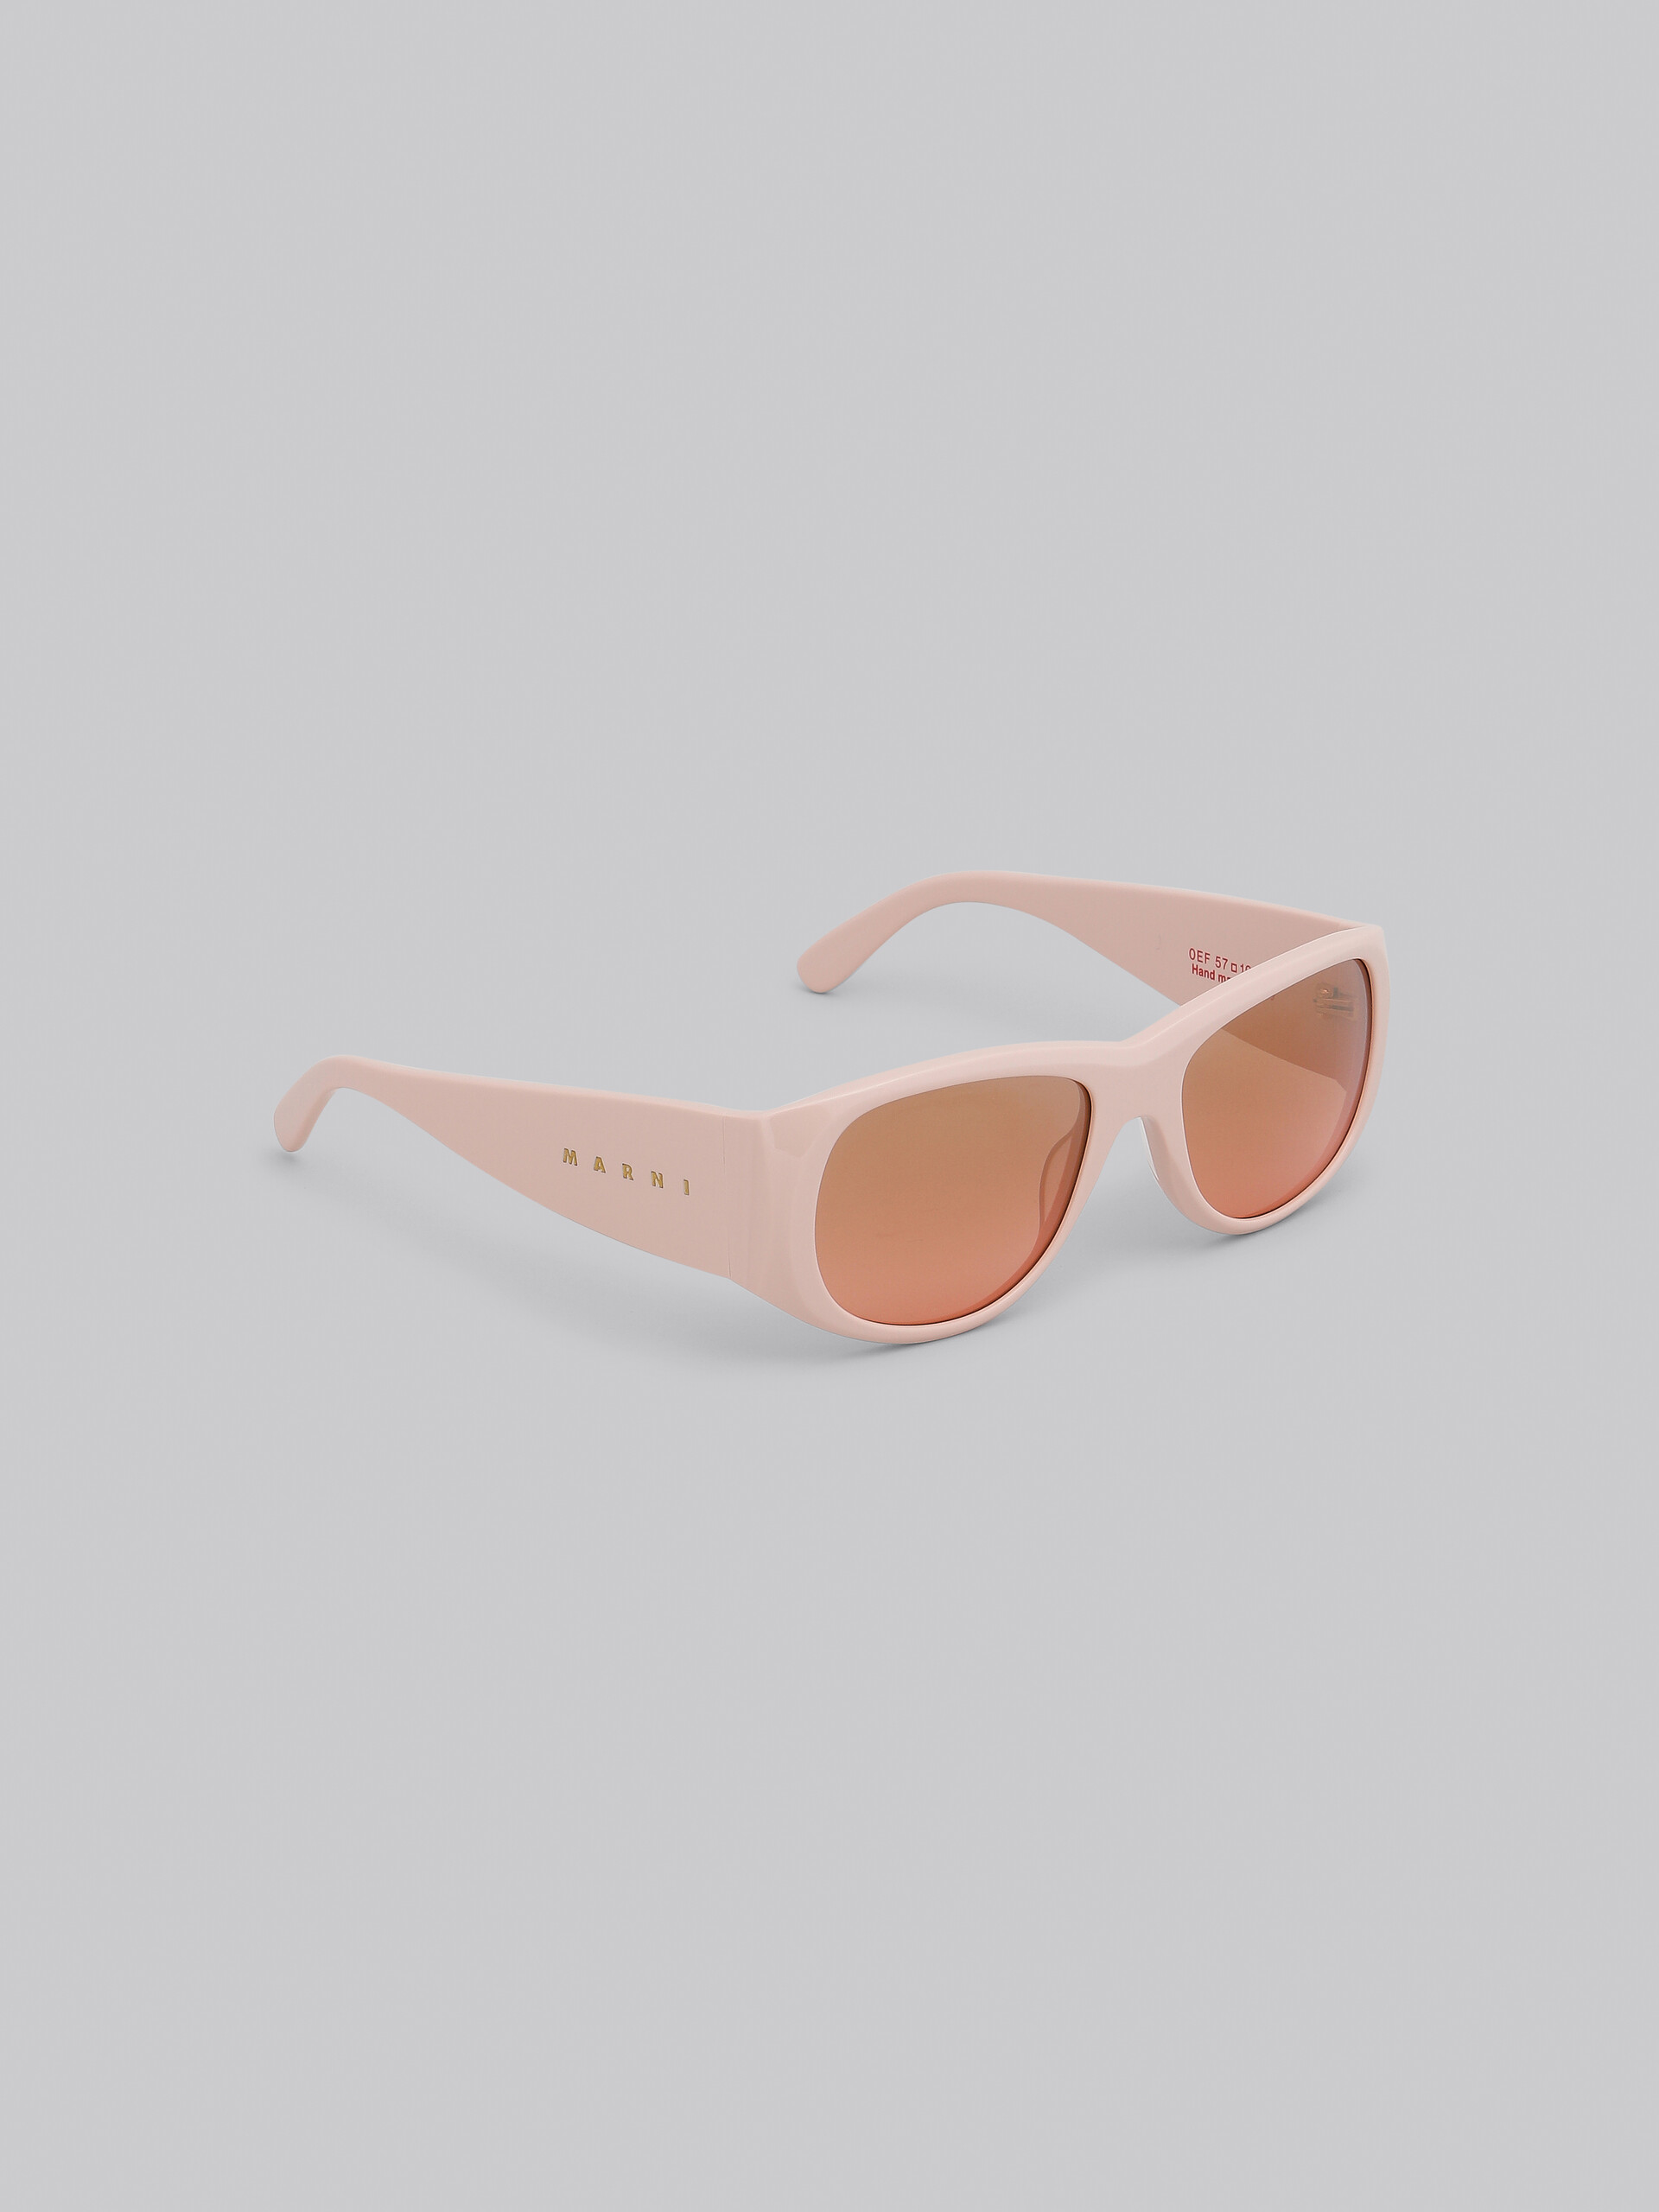 Nude Orinoco River acetate sunglasses - Optical - Image 3